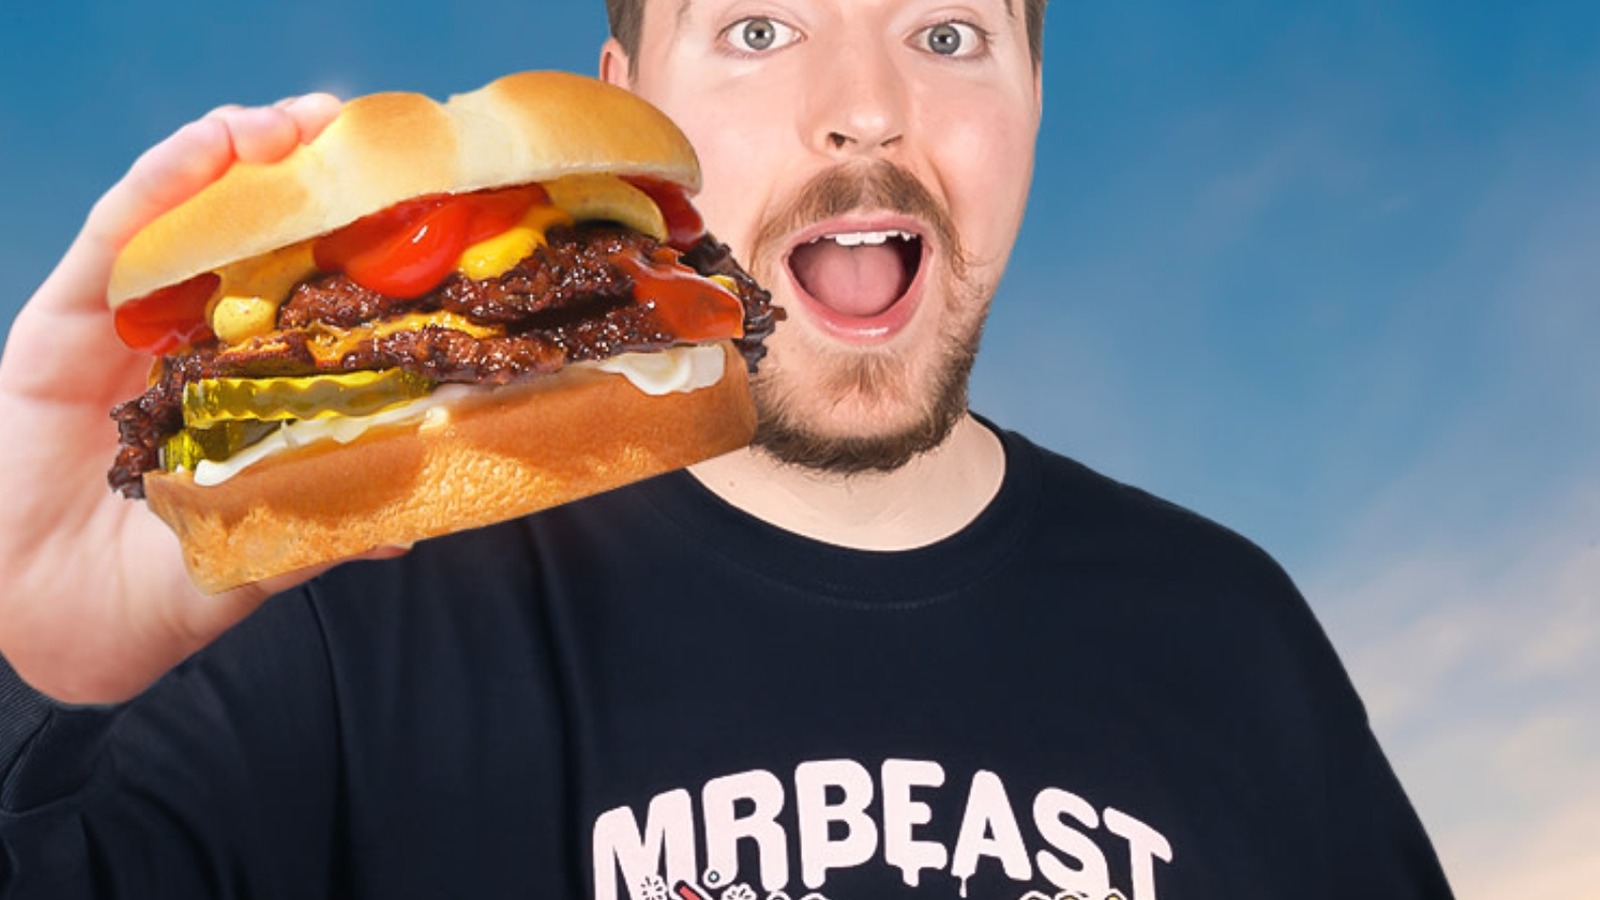 Visiting The First MrBeast Burger Restaurant (American Dream Mall) 